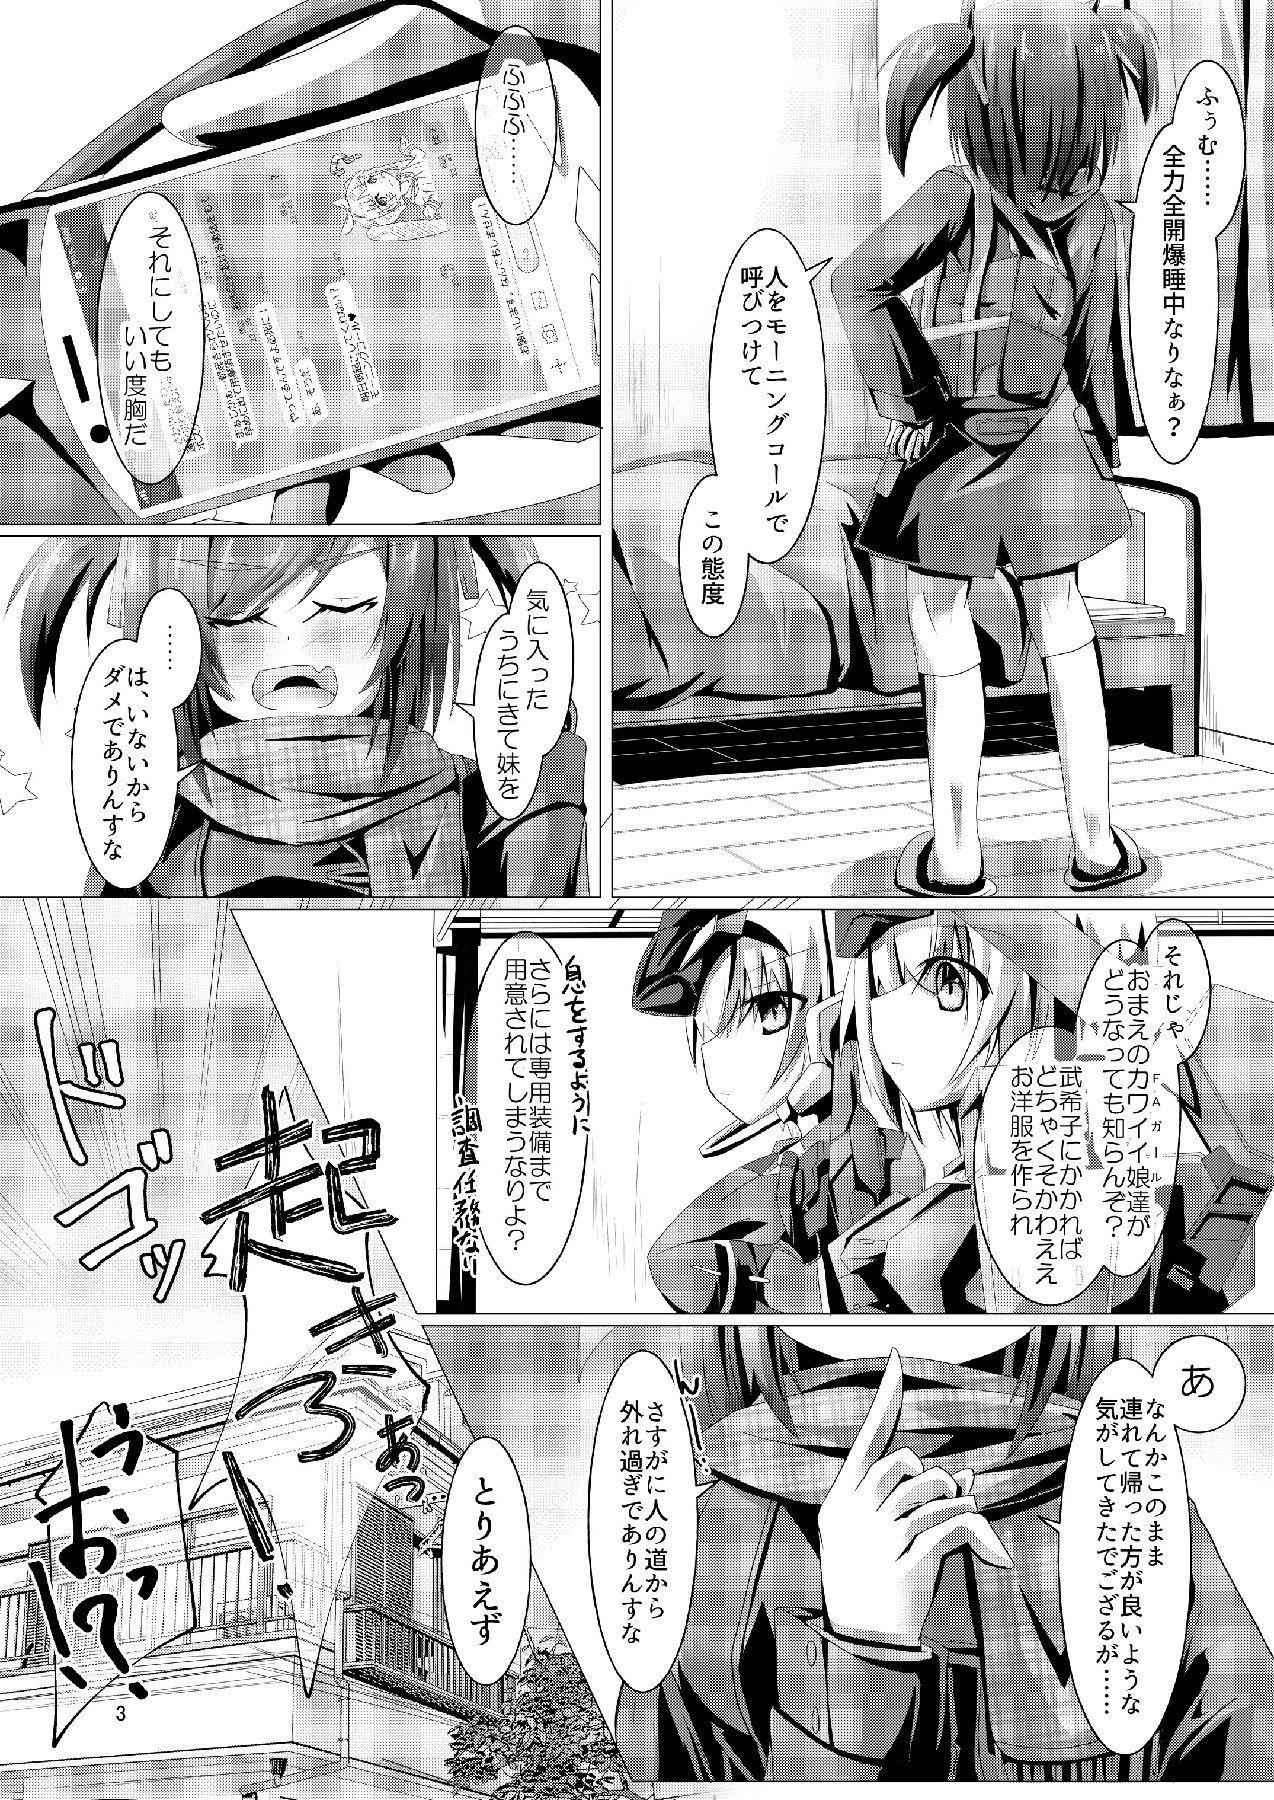 Bang Bukiko ga Kokuhaku Sareta Ken 3 - Frame arms girl Model - Page 3